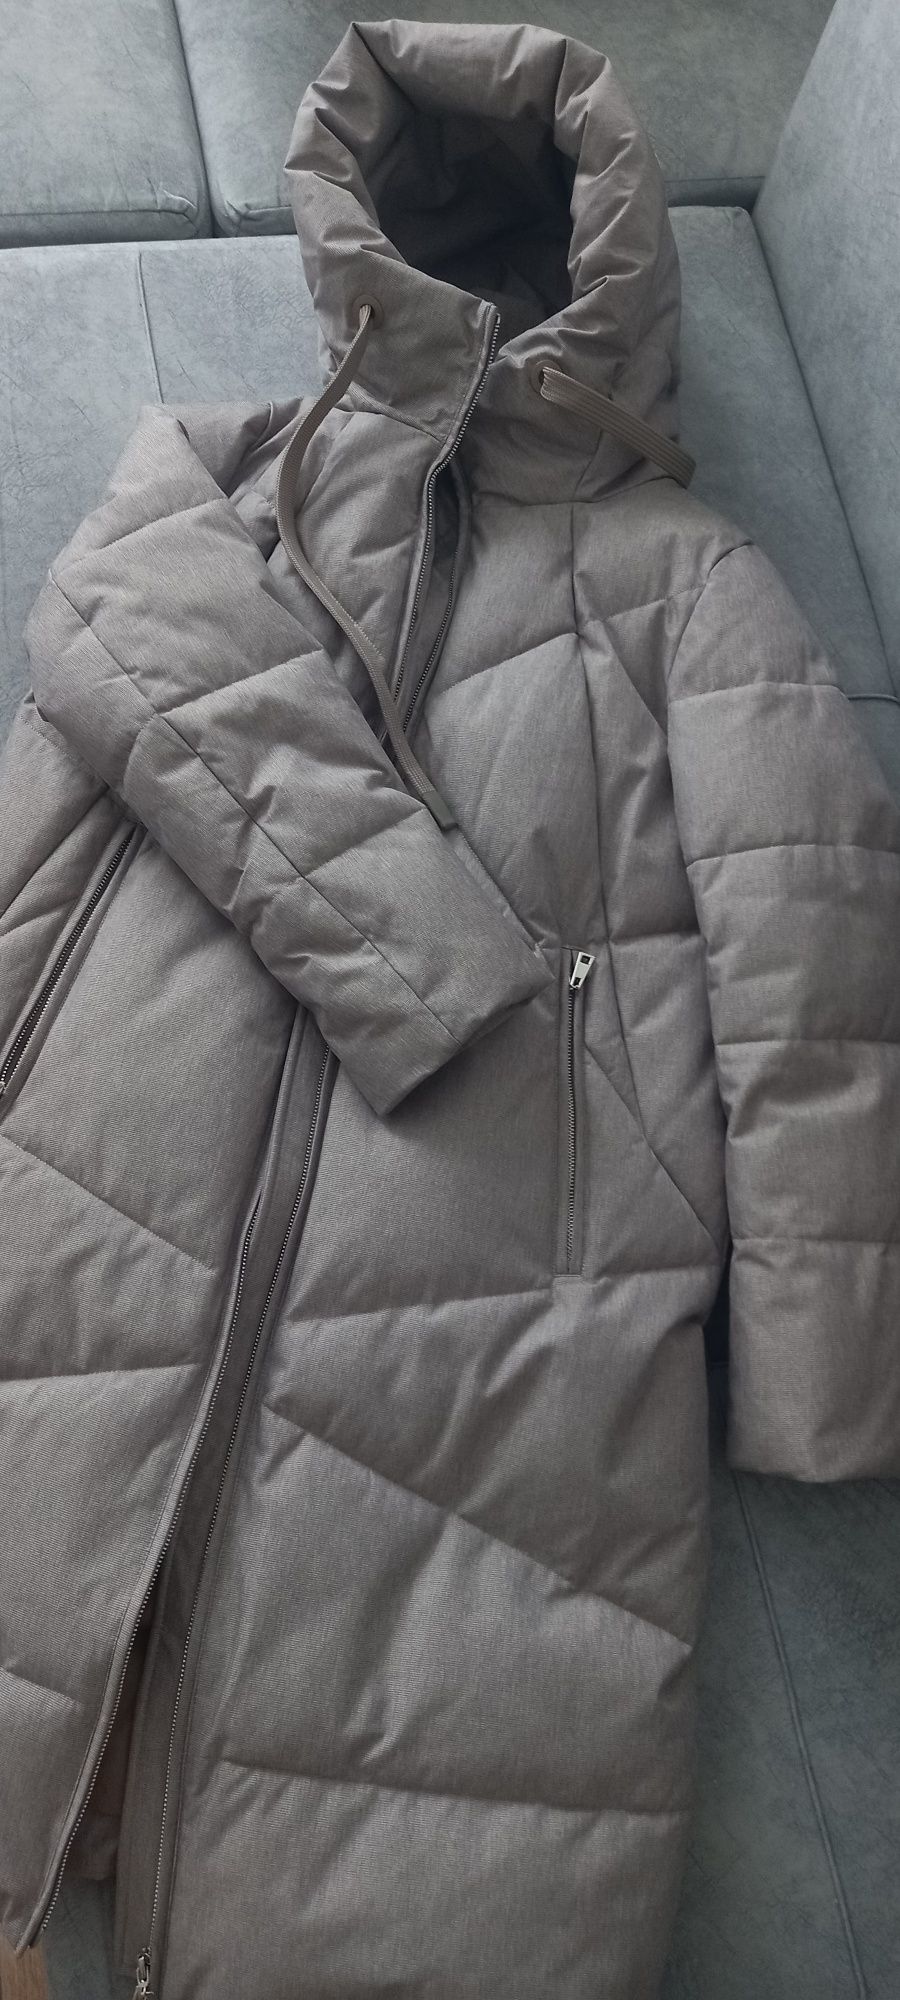 Пальто ARK nets бренд до -30, размер 48 (подойдет и на 44-46) ЗИМА